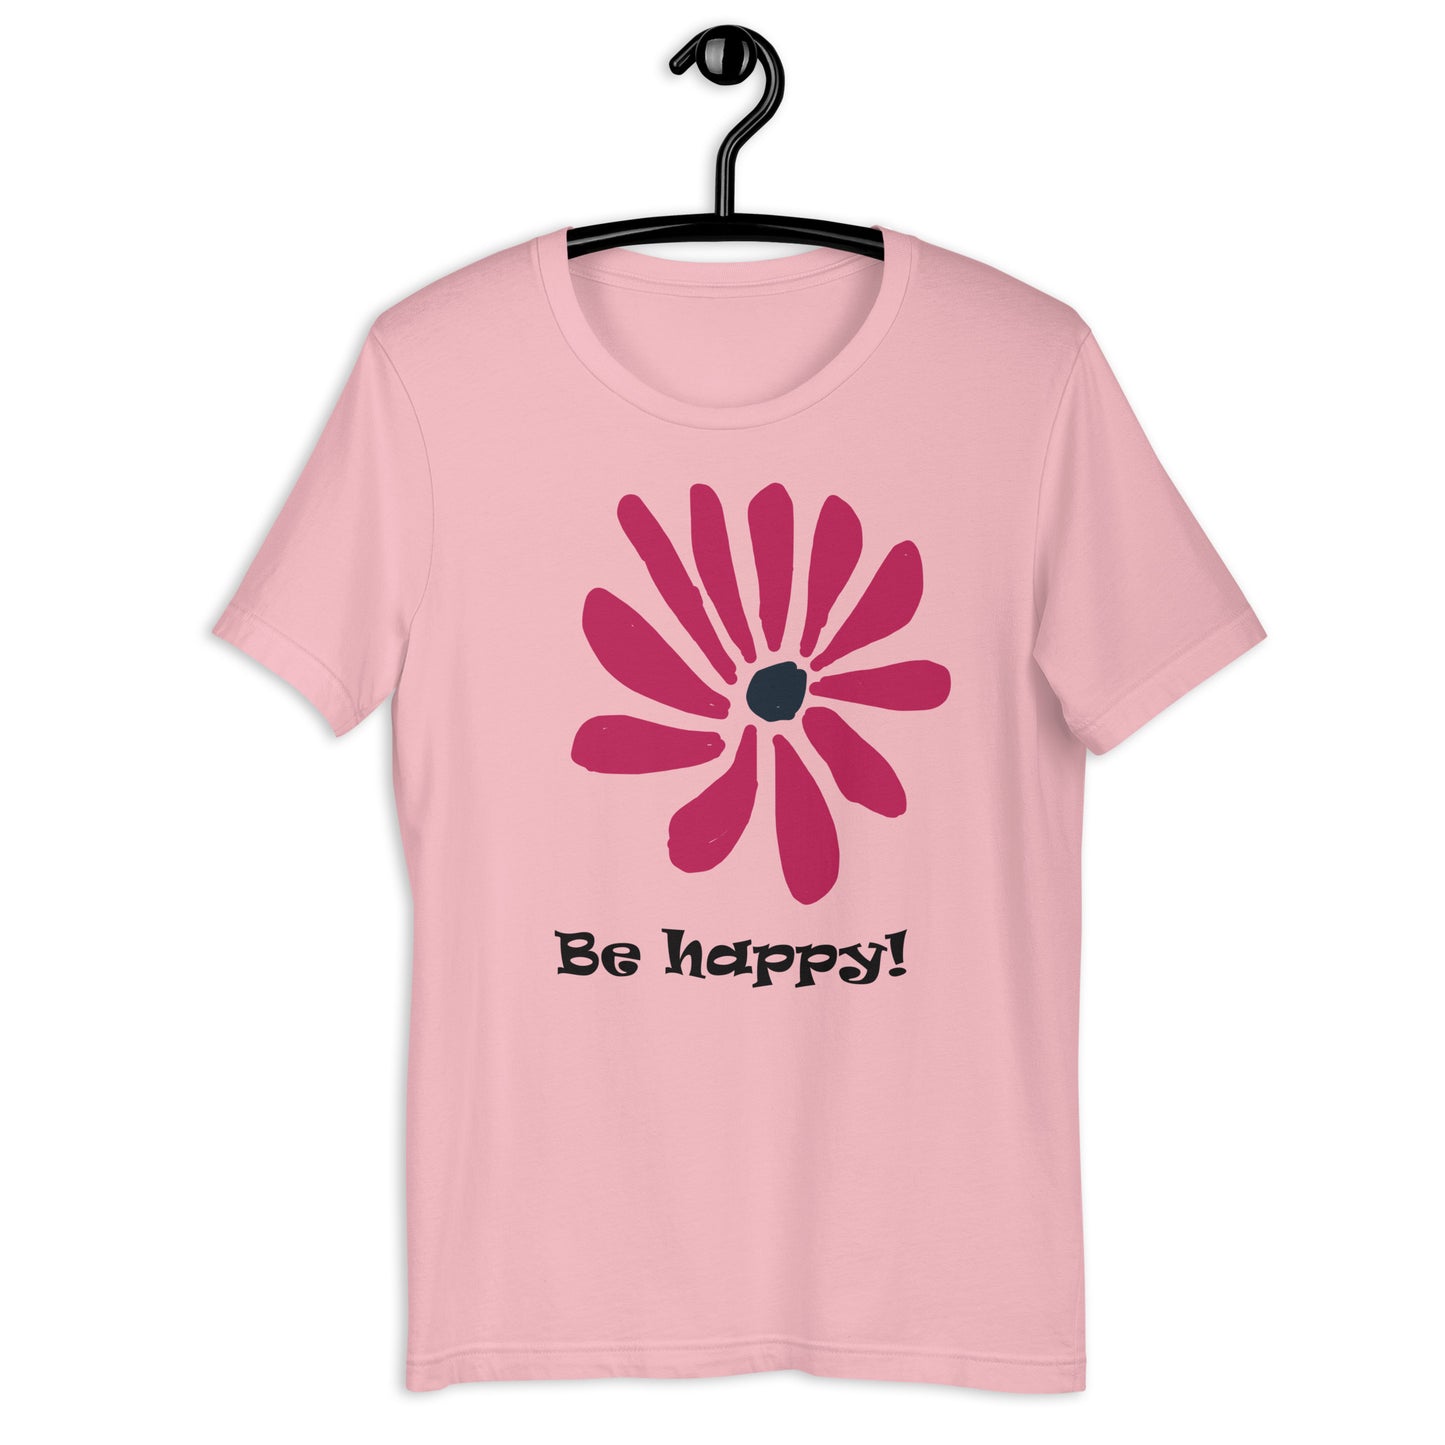 Be happy! Unisex t-shirt